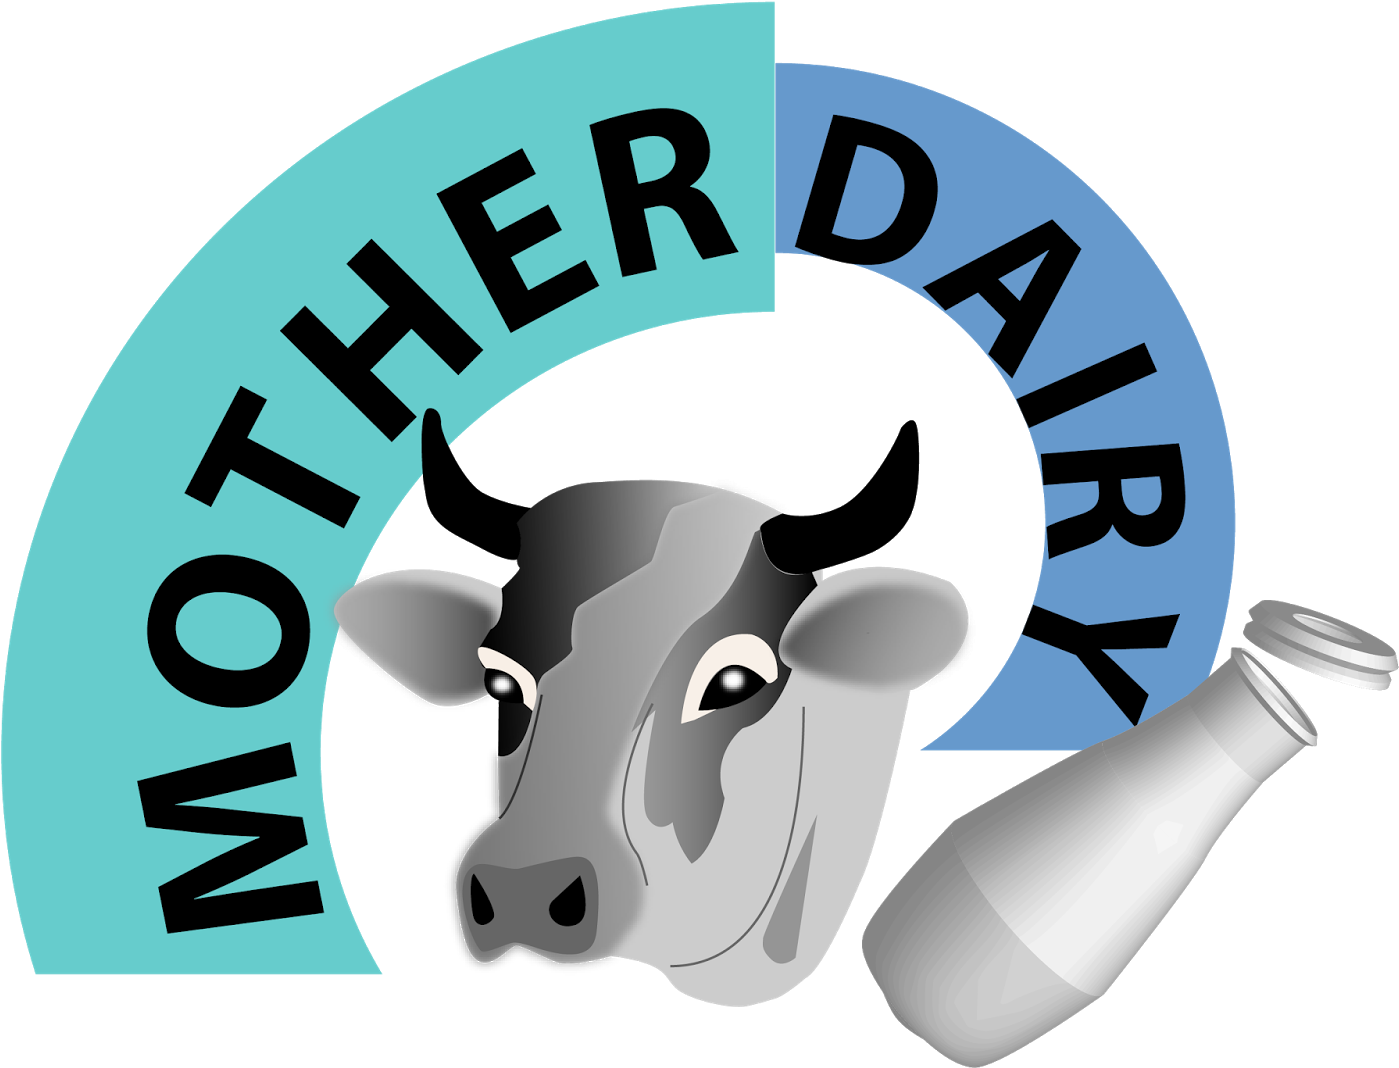 Mother Dairy Milk Shop in Dwarka Sector 11,Delhi - Best Dairy Product  Retailers in Delhi - Justdial